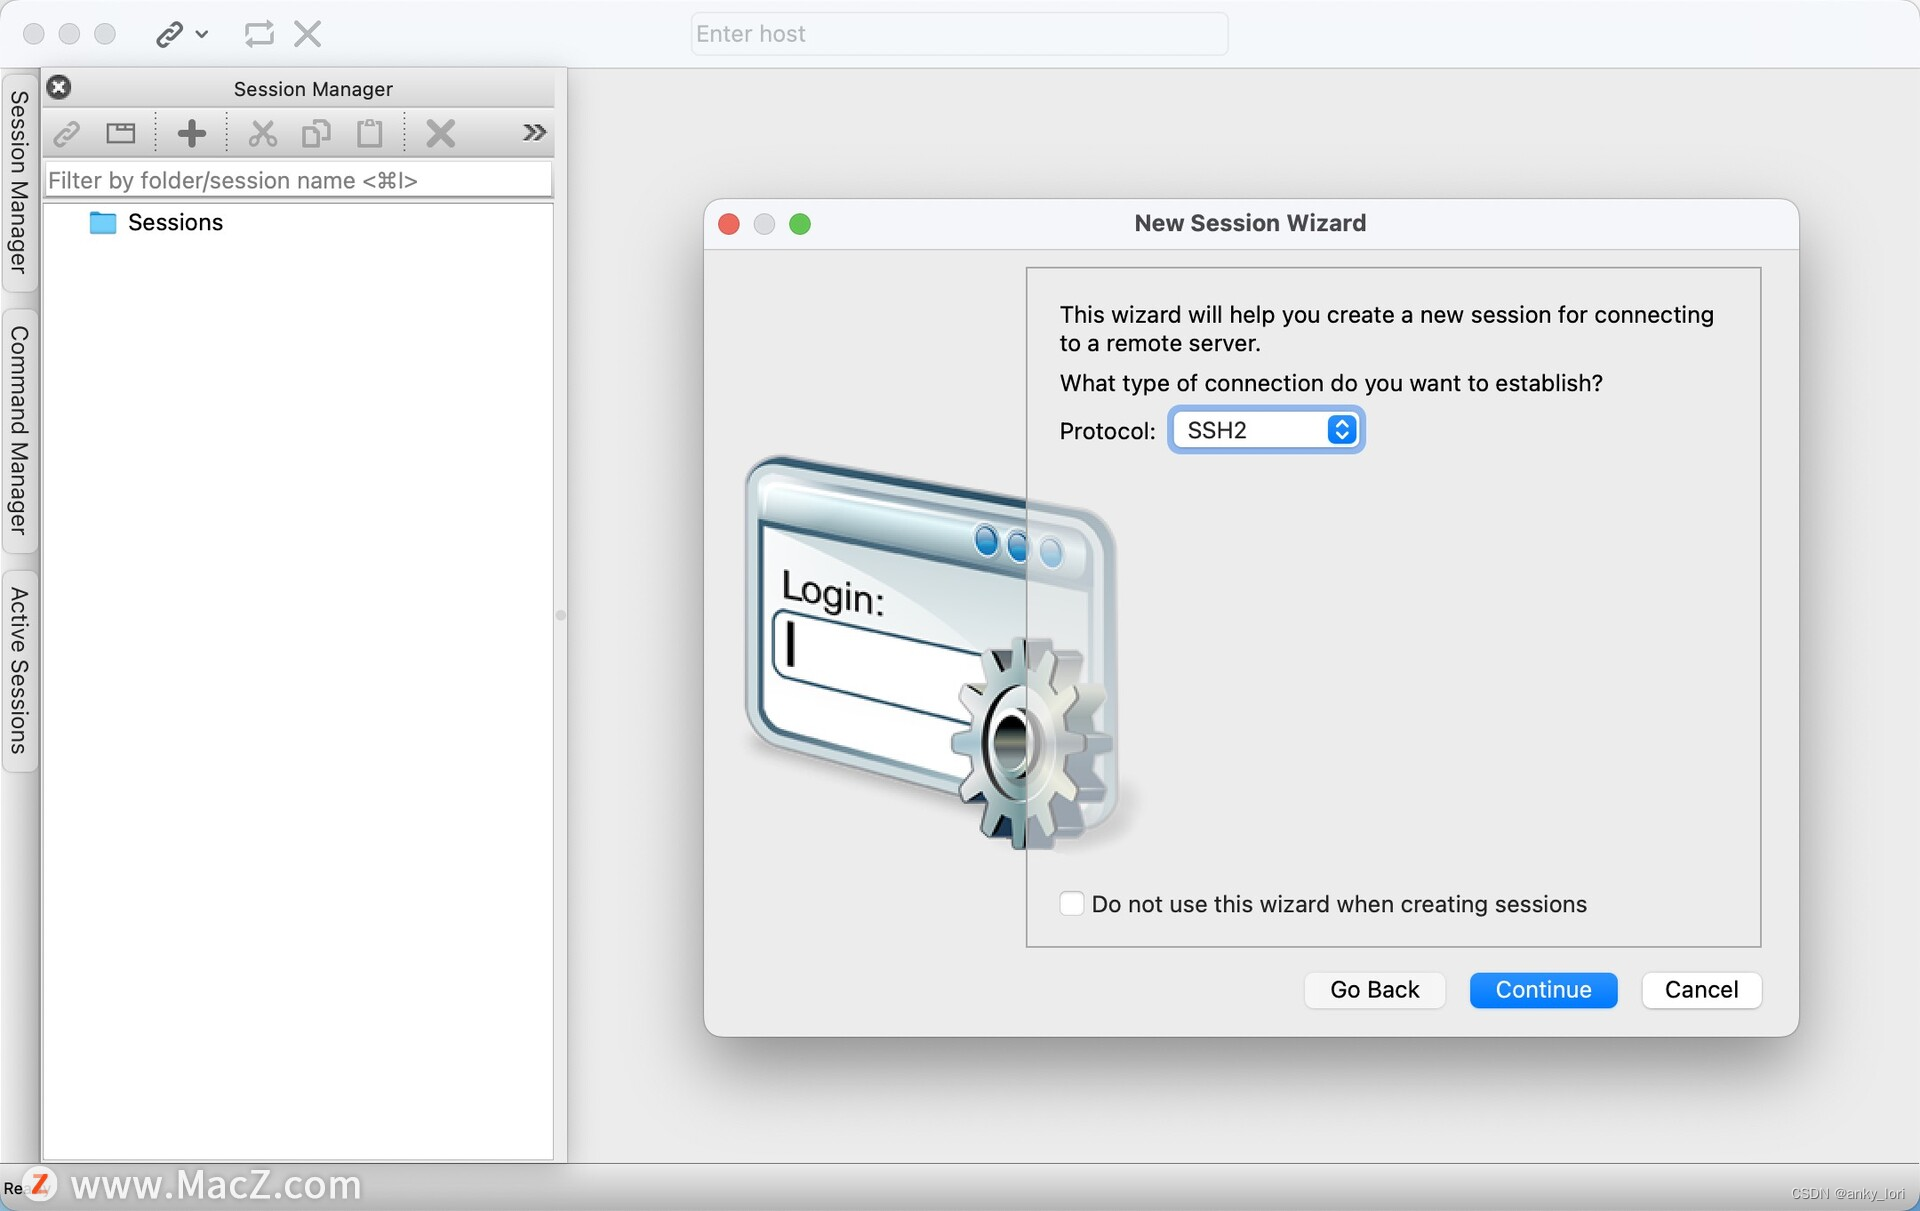 SecureCRT 9.4.2 for Mac